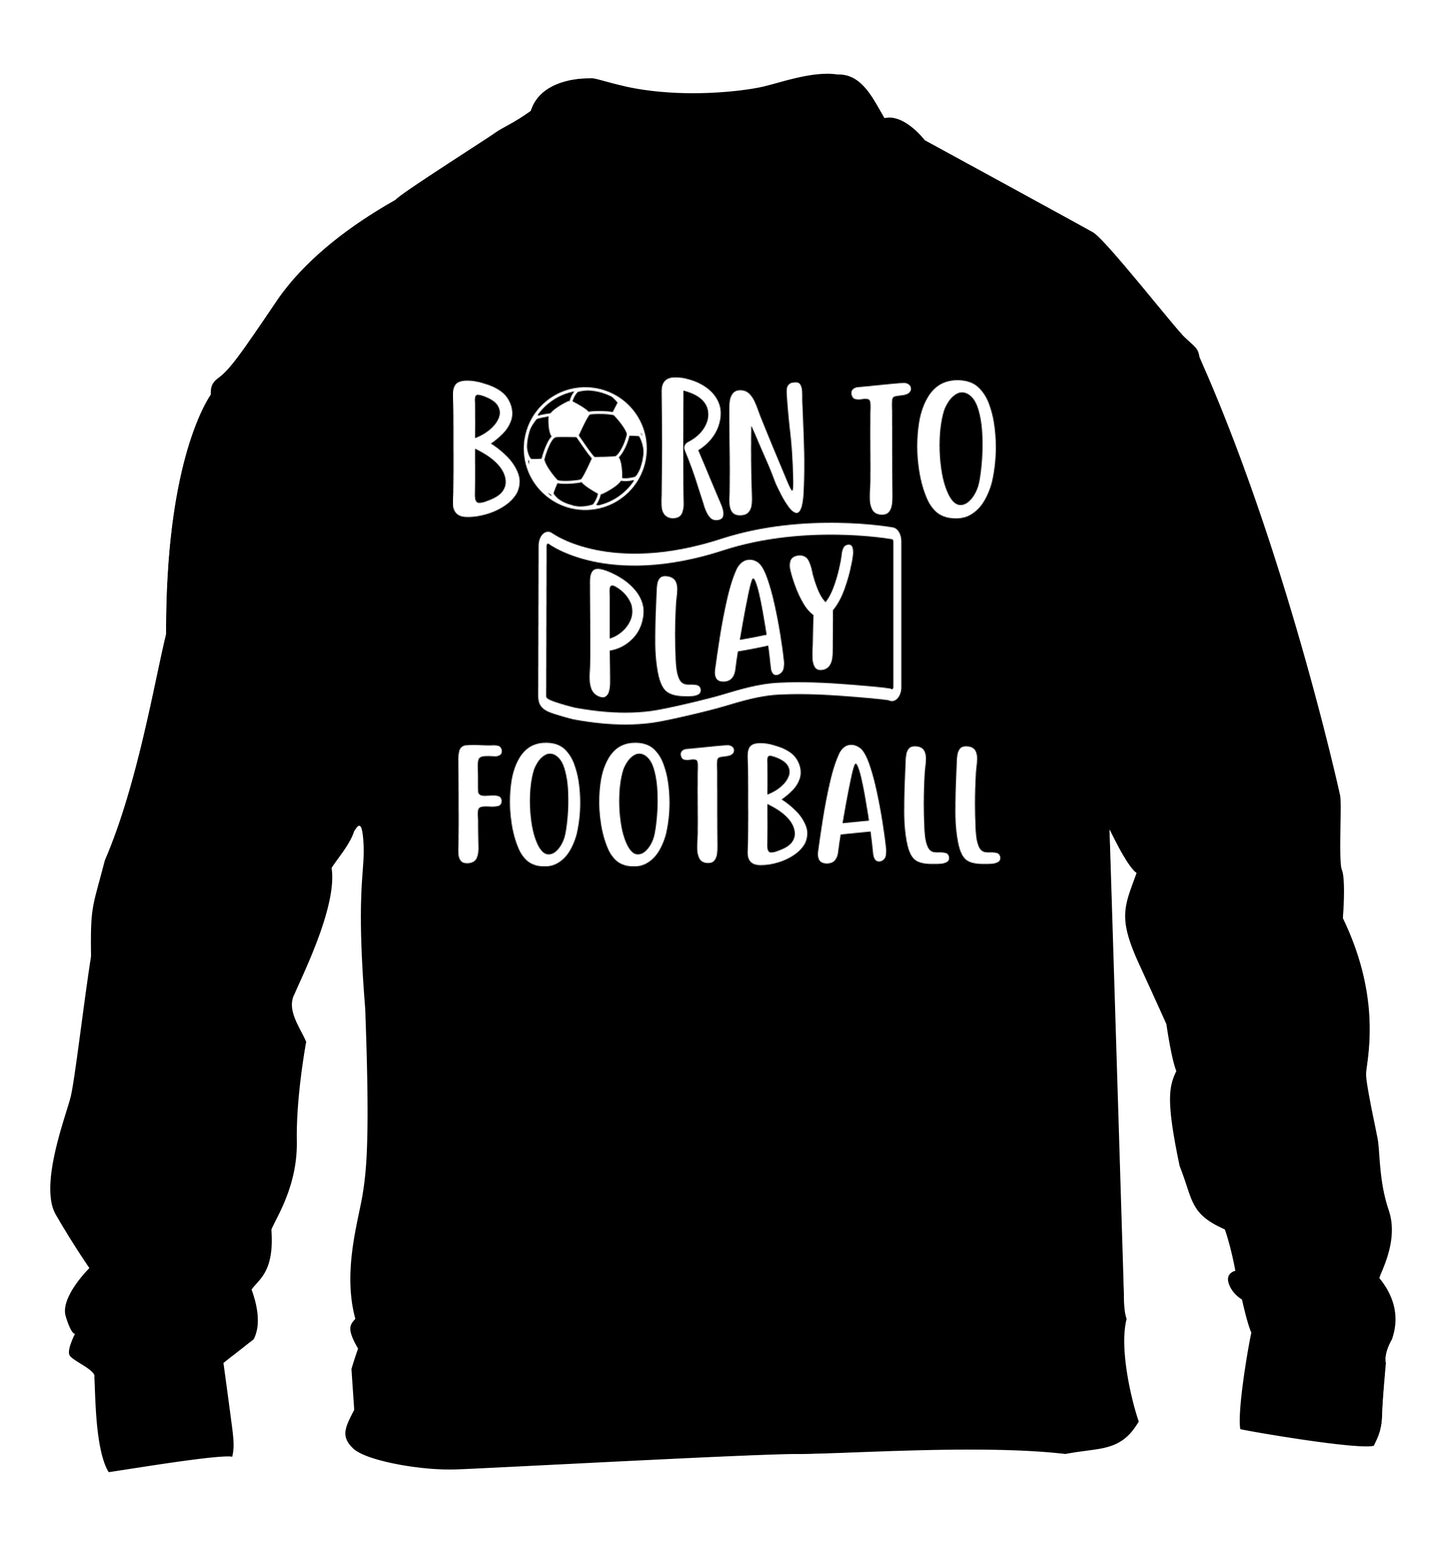 Born to play football children's black sweater 12-14 Years